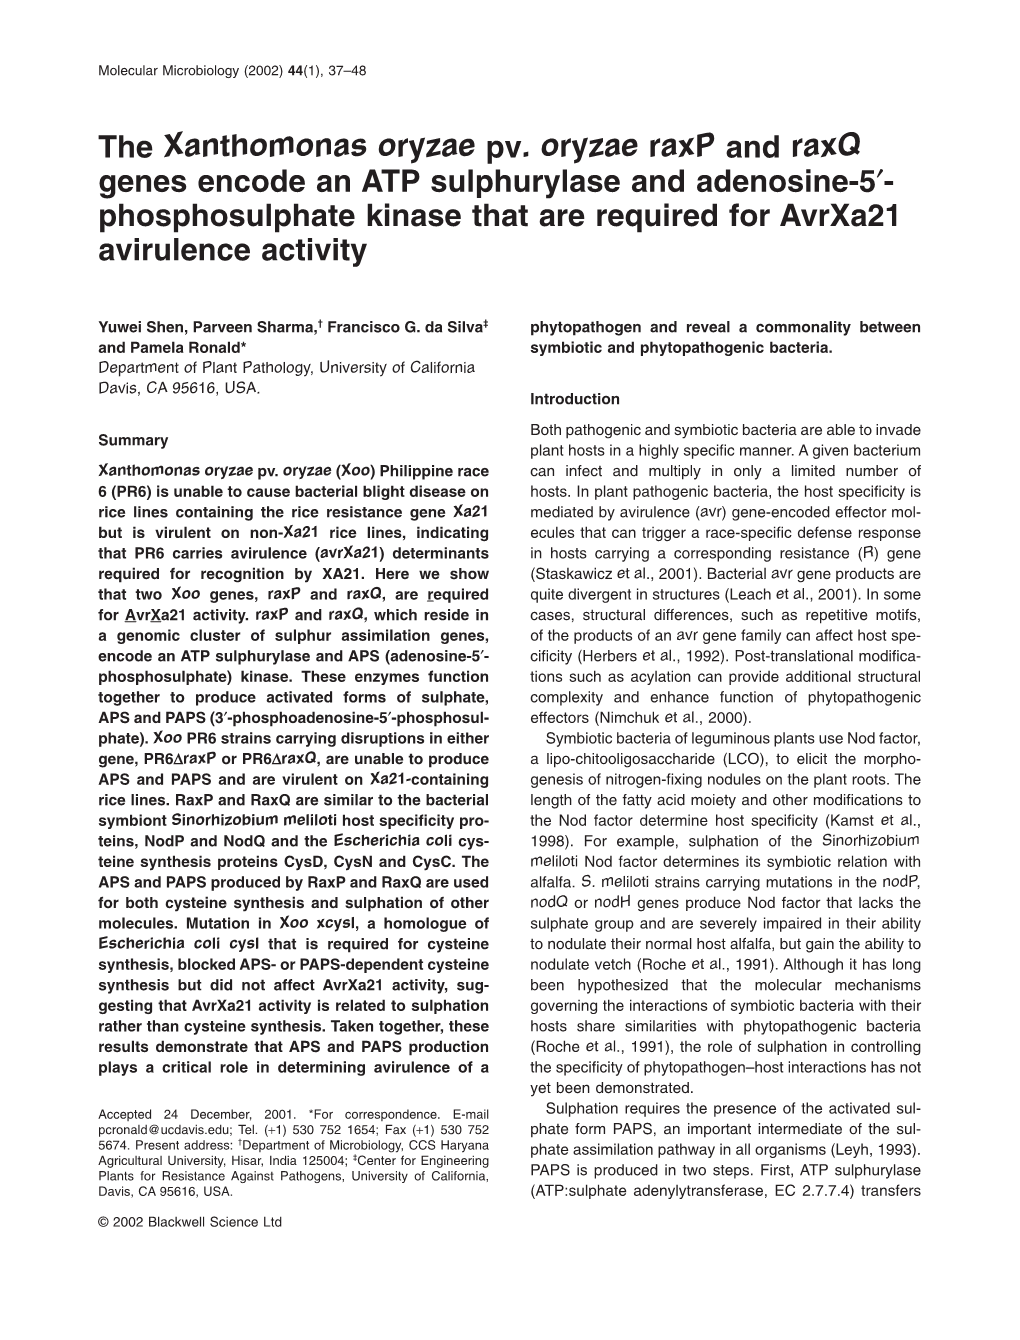 The Xanthomonas Oryzae Pv. Oryzae Raxp and Raxq Genes Encode an ATP Sulphurylase and Adenosine-5